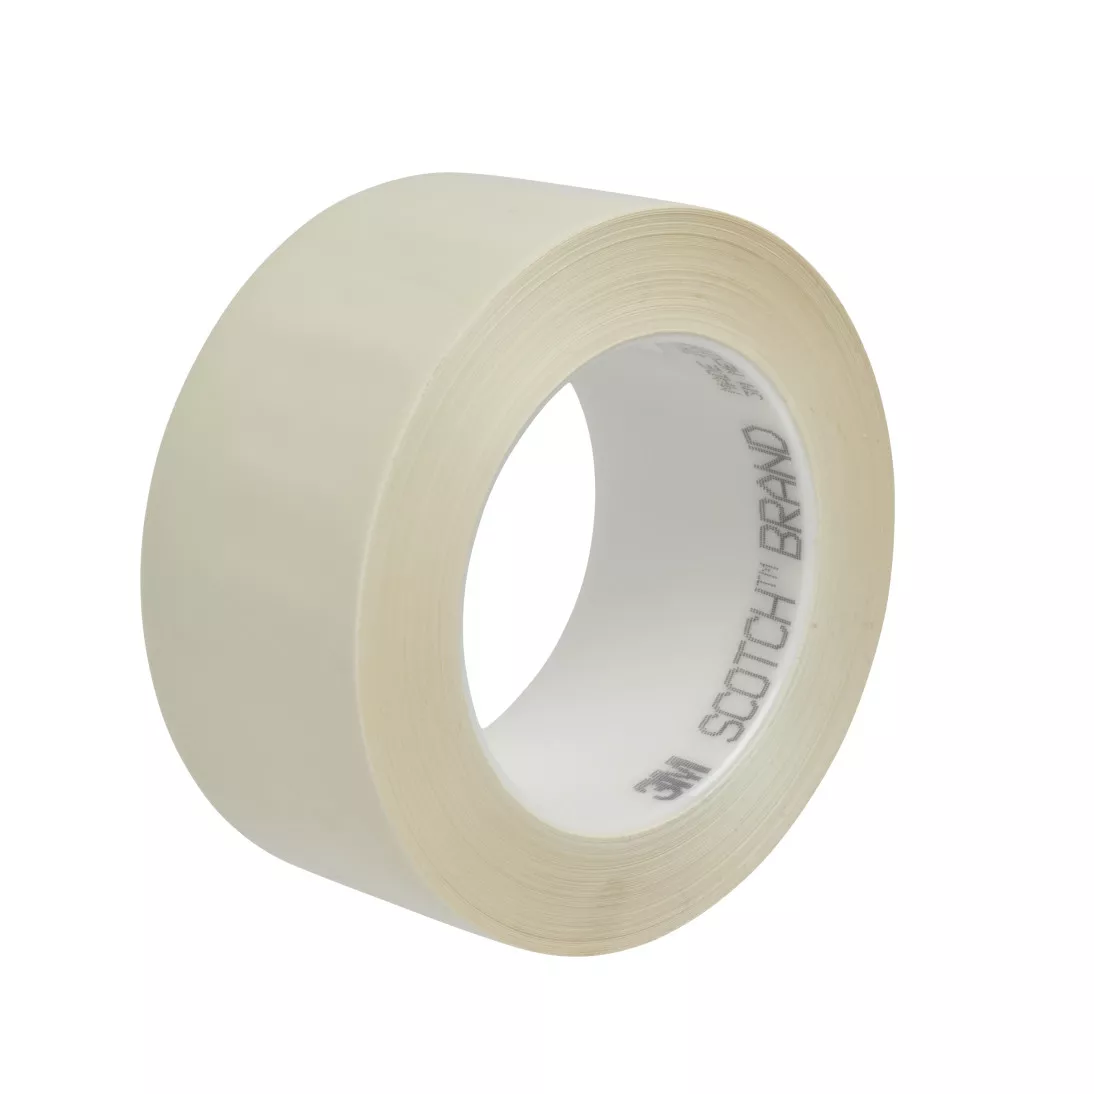 3M™ High Temperature Nylon Film Tape 855, White, 6 in x 72 yd, 3.6 mil,
8 rolls per case